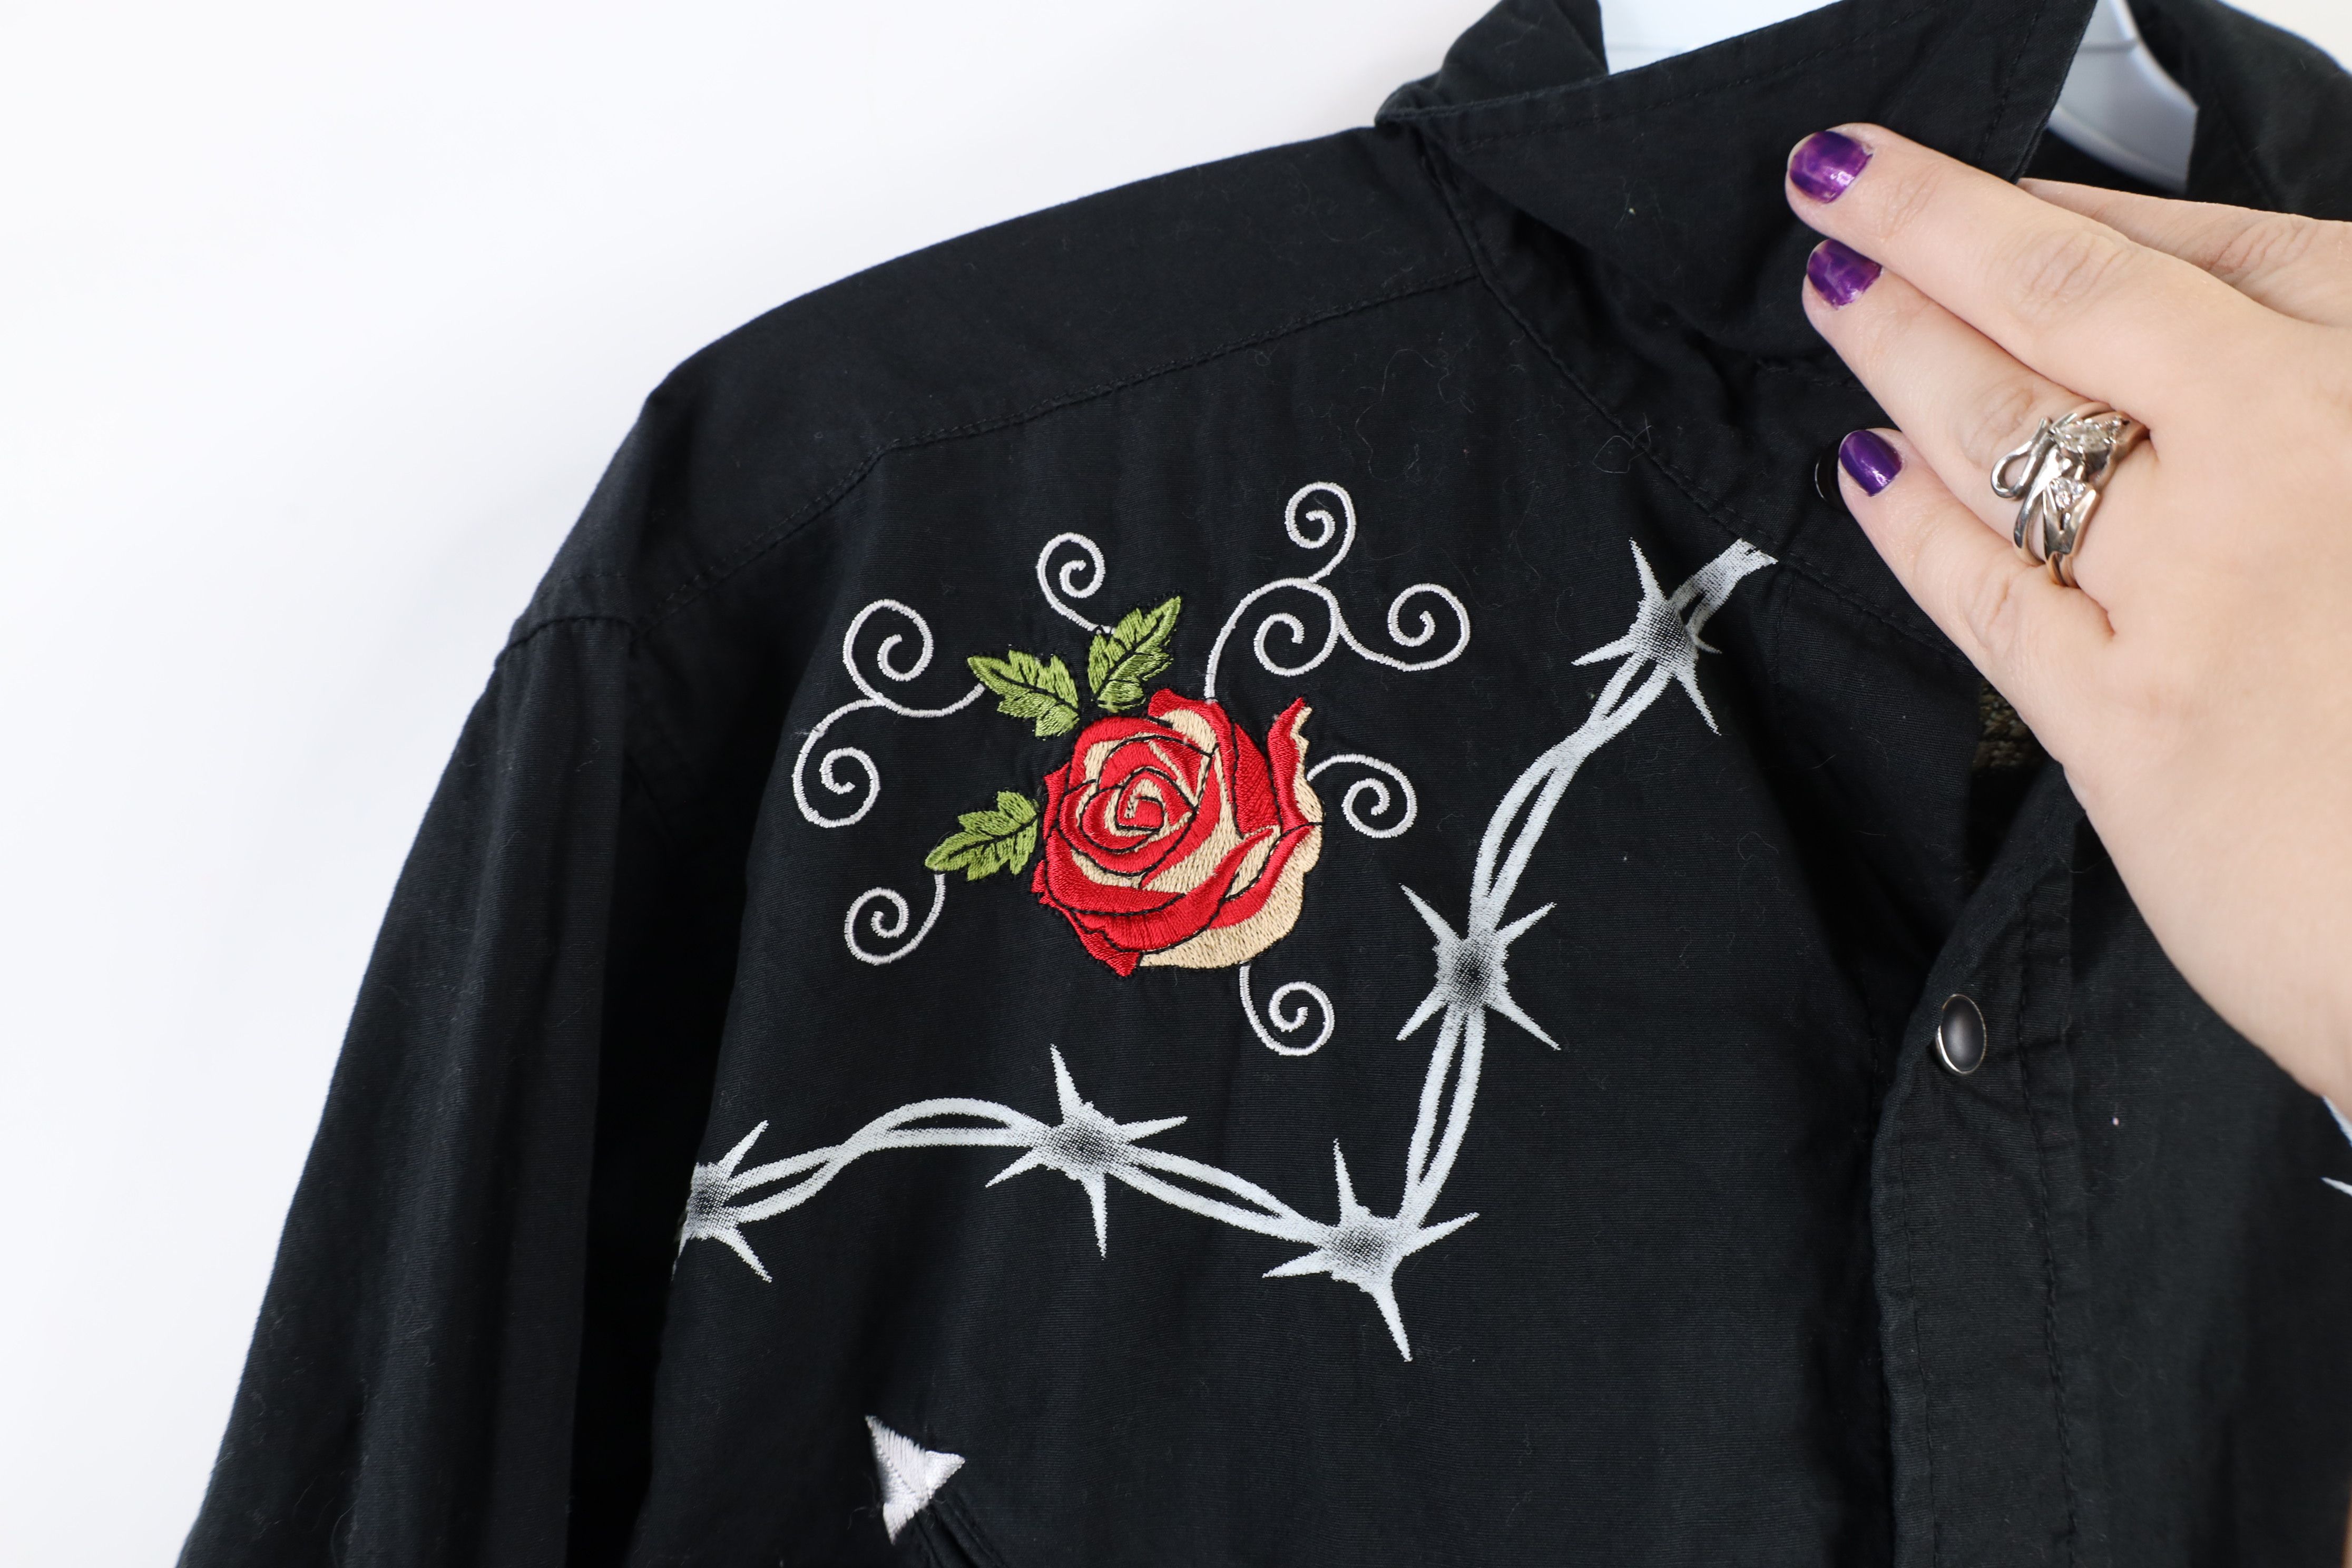 Vintage Vintage Rockabilly Rose Skull Snap Button Shirt Black Size US S / EU 44-46 / 1 - 4 Thumbnail